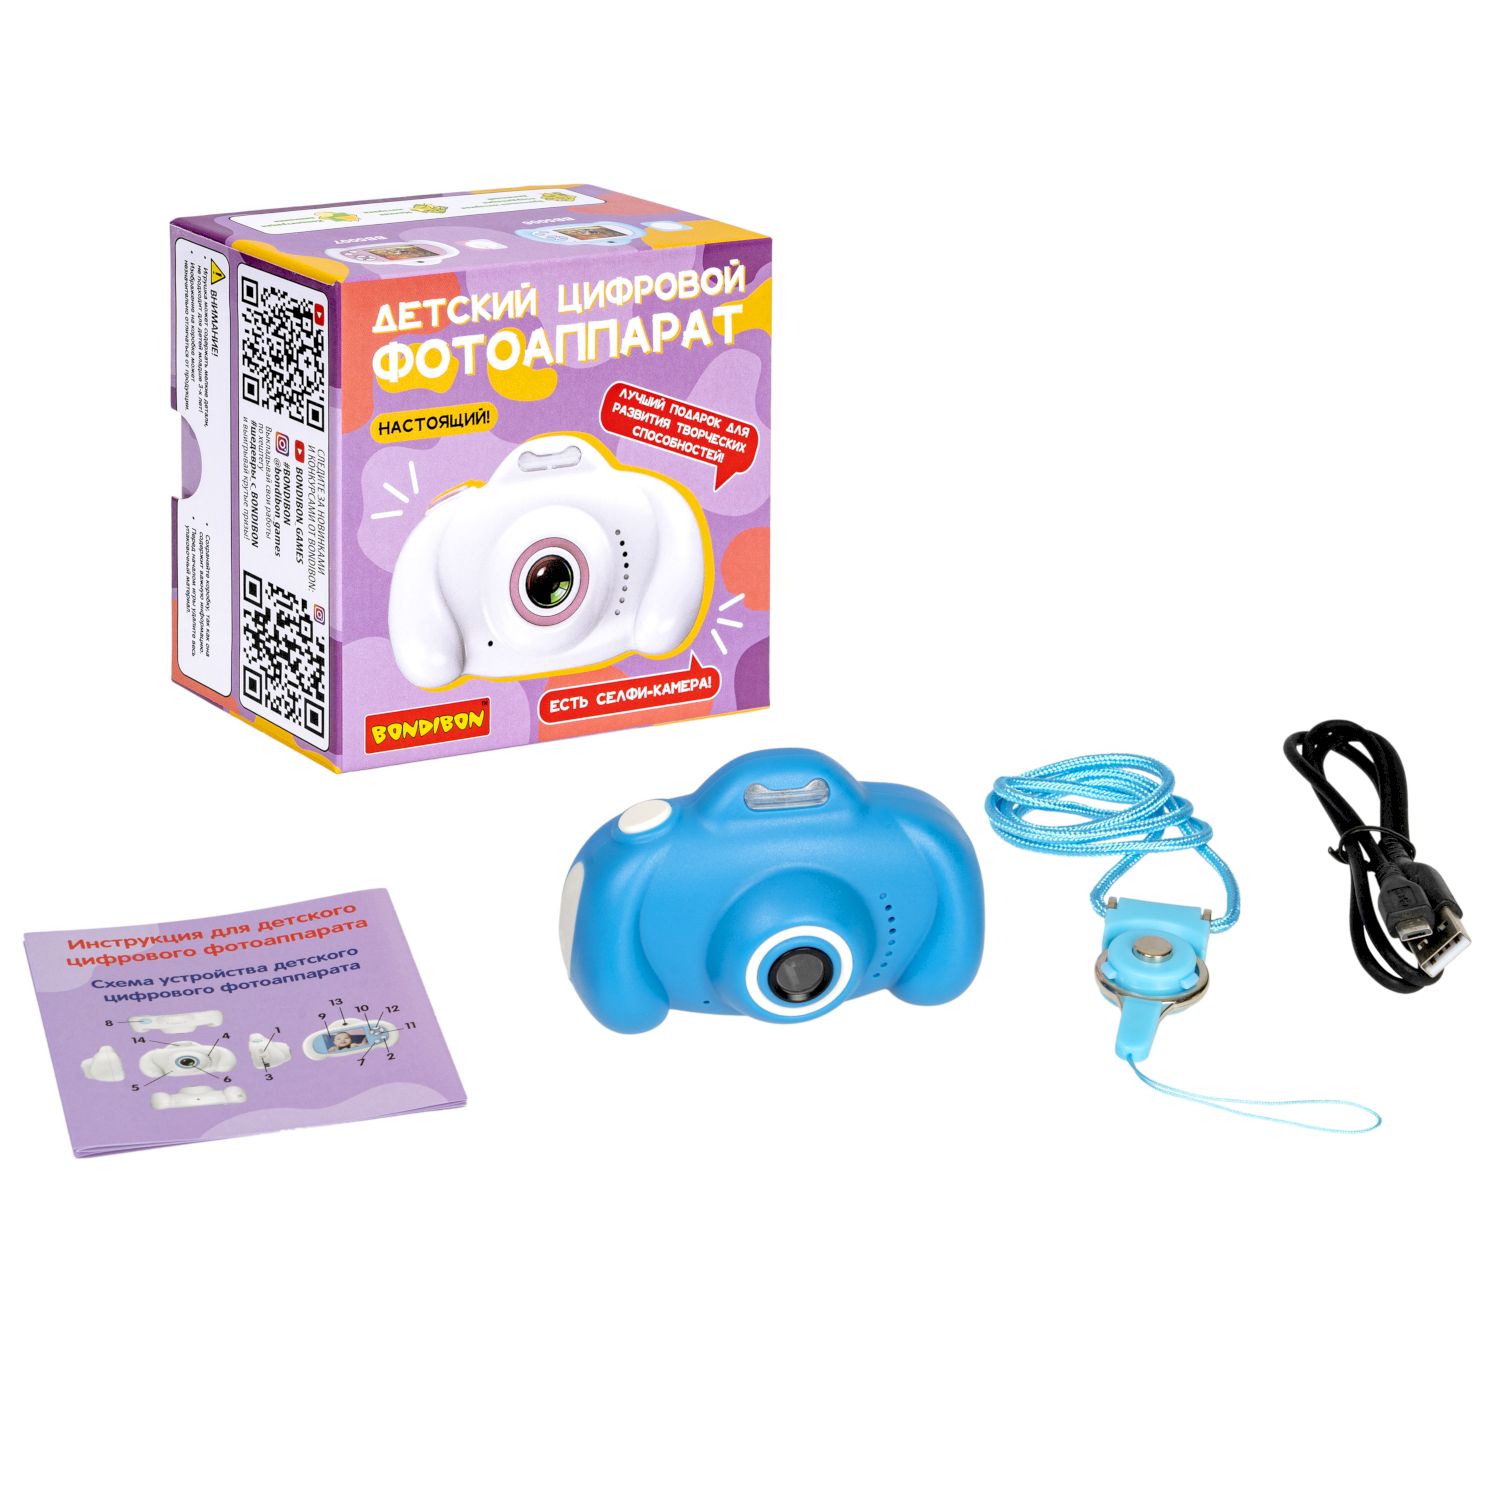 Цифровой фотоаппарат BONDIBON с селфи камерой и видео съемкой голубого цвета - фото 5